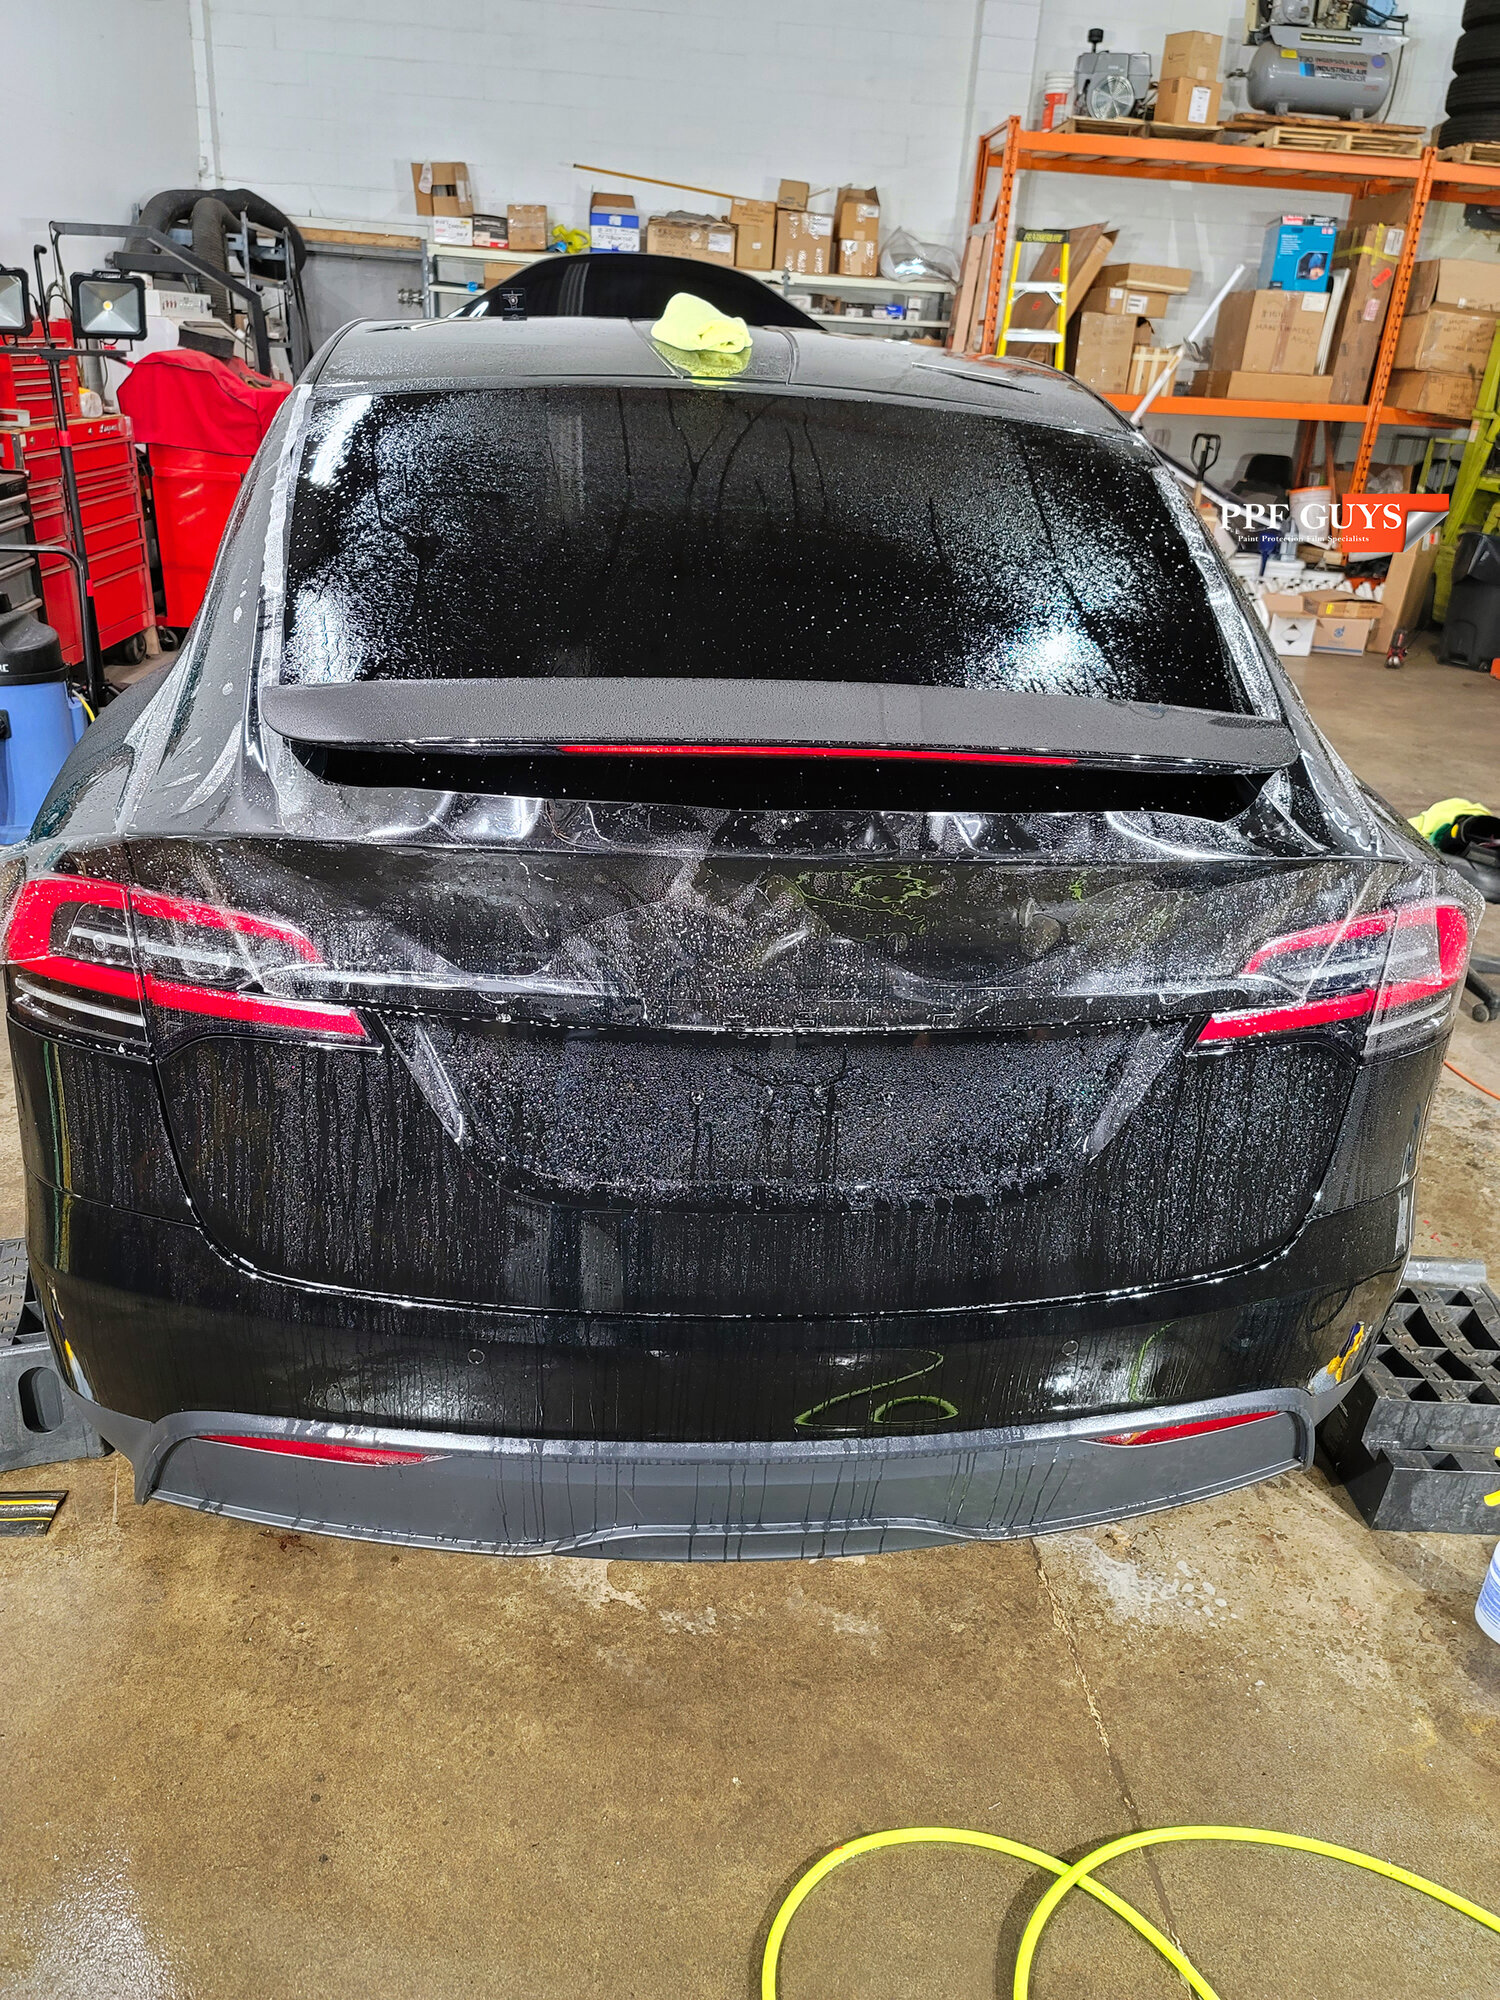 PPF Guys Tesla Model X Black Full Body Xpel Ultimate Fusion PPF (18).jpg